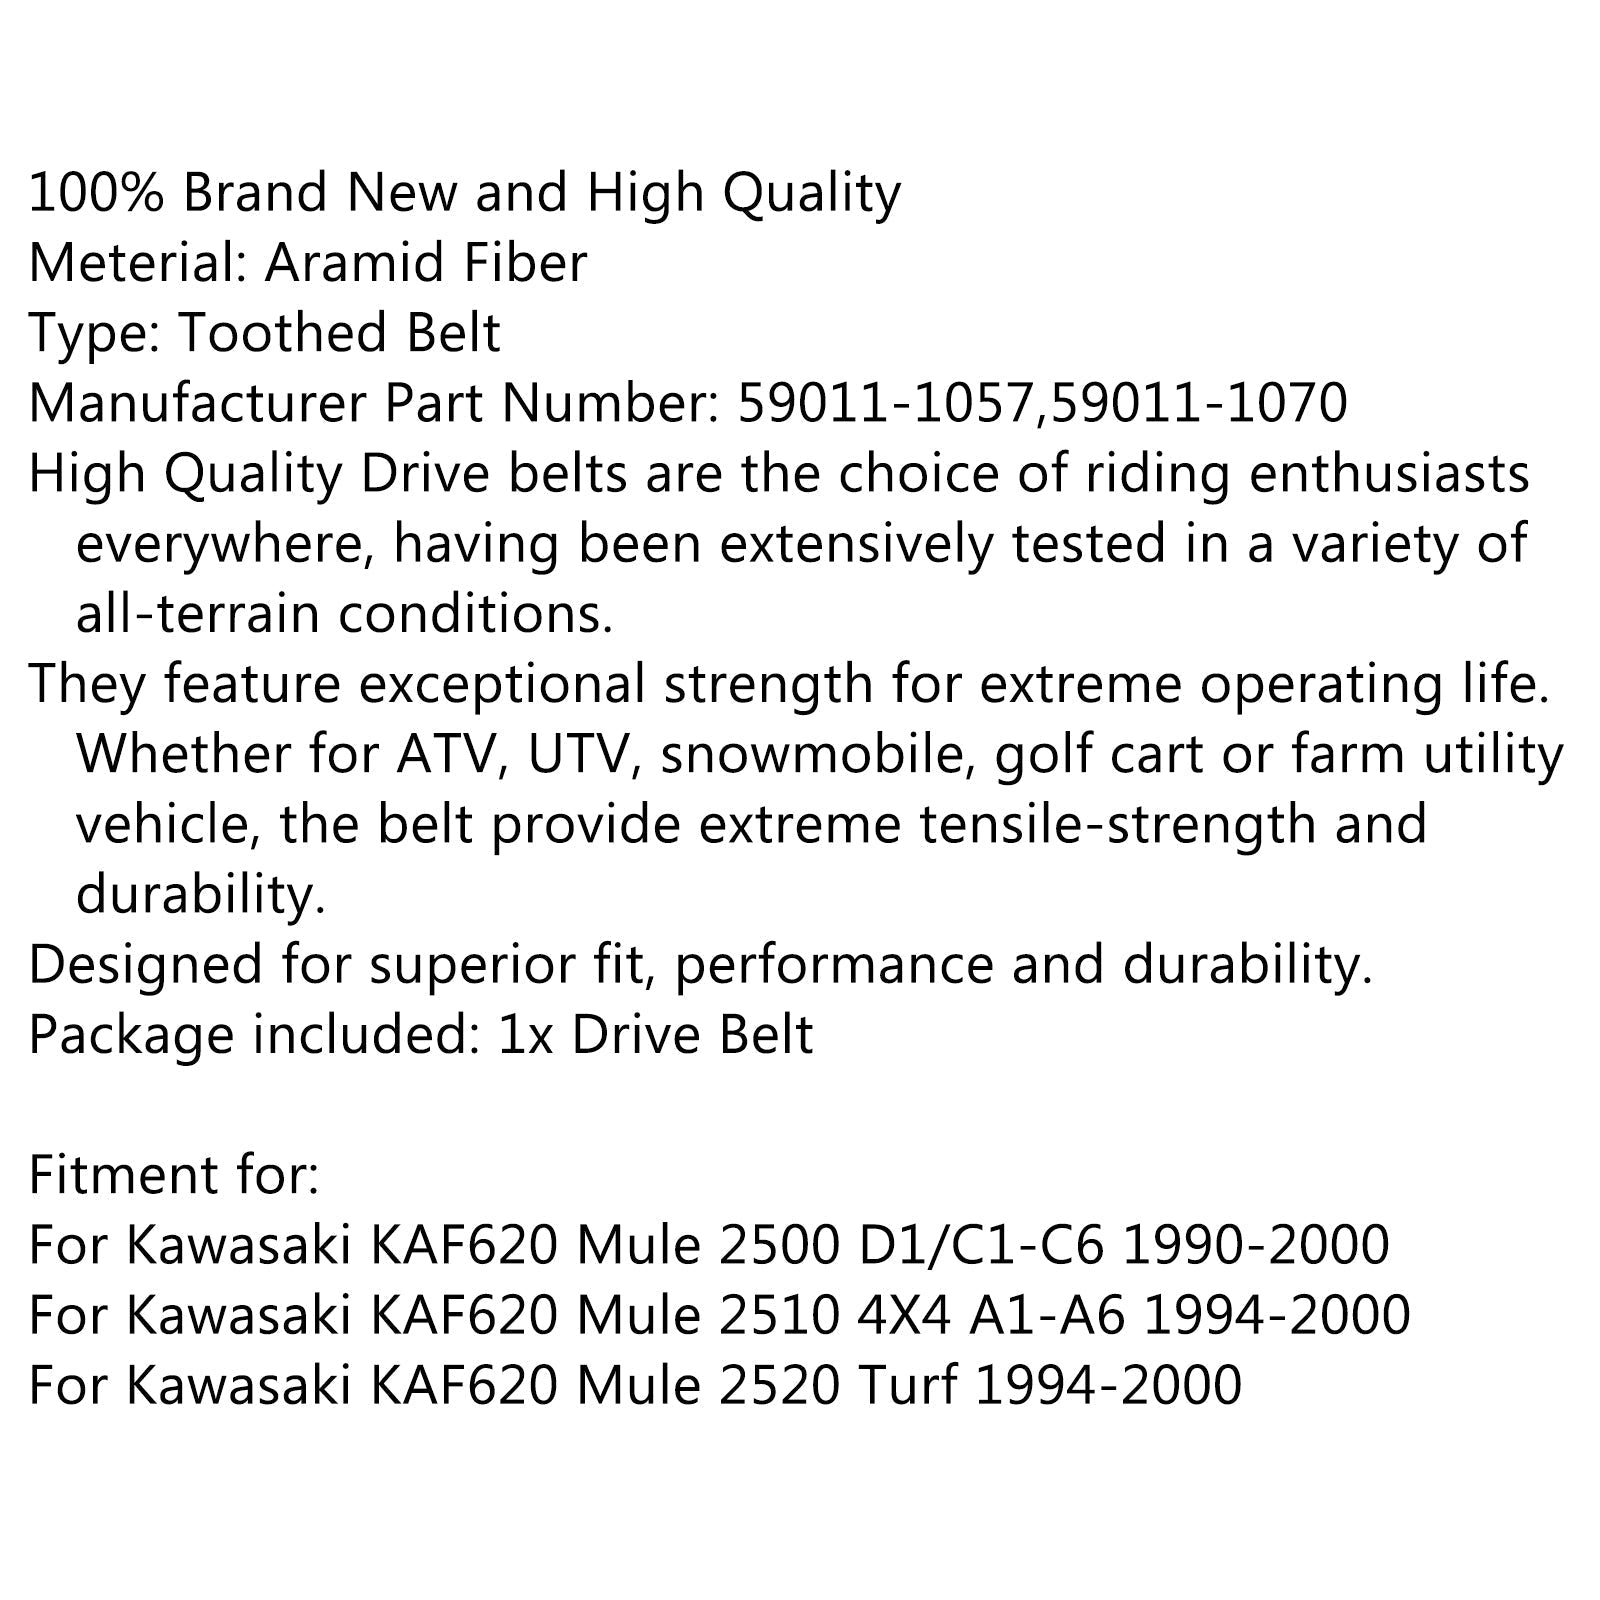 Cinghia di trasmissione 59011-1070 Per Kawasaki KAF620 Mule 2500 2000-2001 2510 2000-2001 Generico